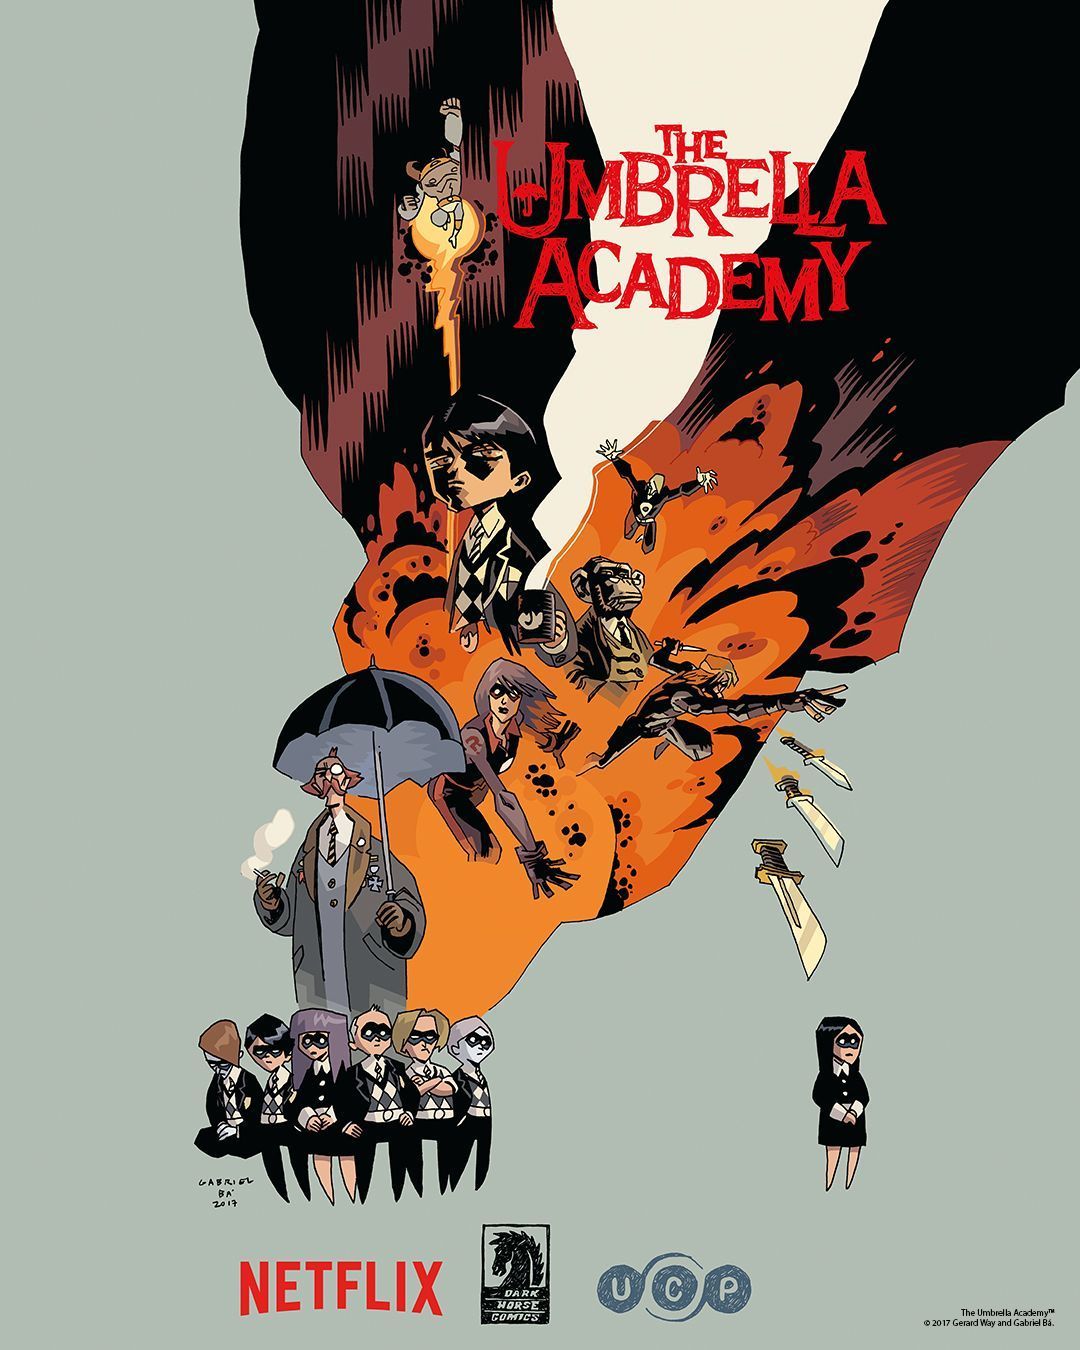 The Umbrella Academy Wallpaper Free The Umbrella Academy Background